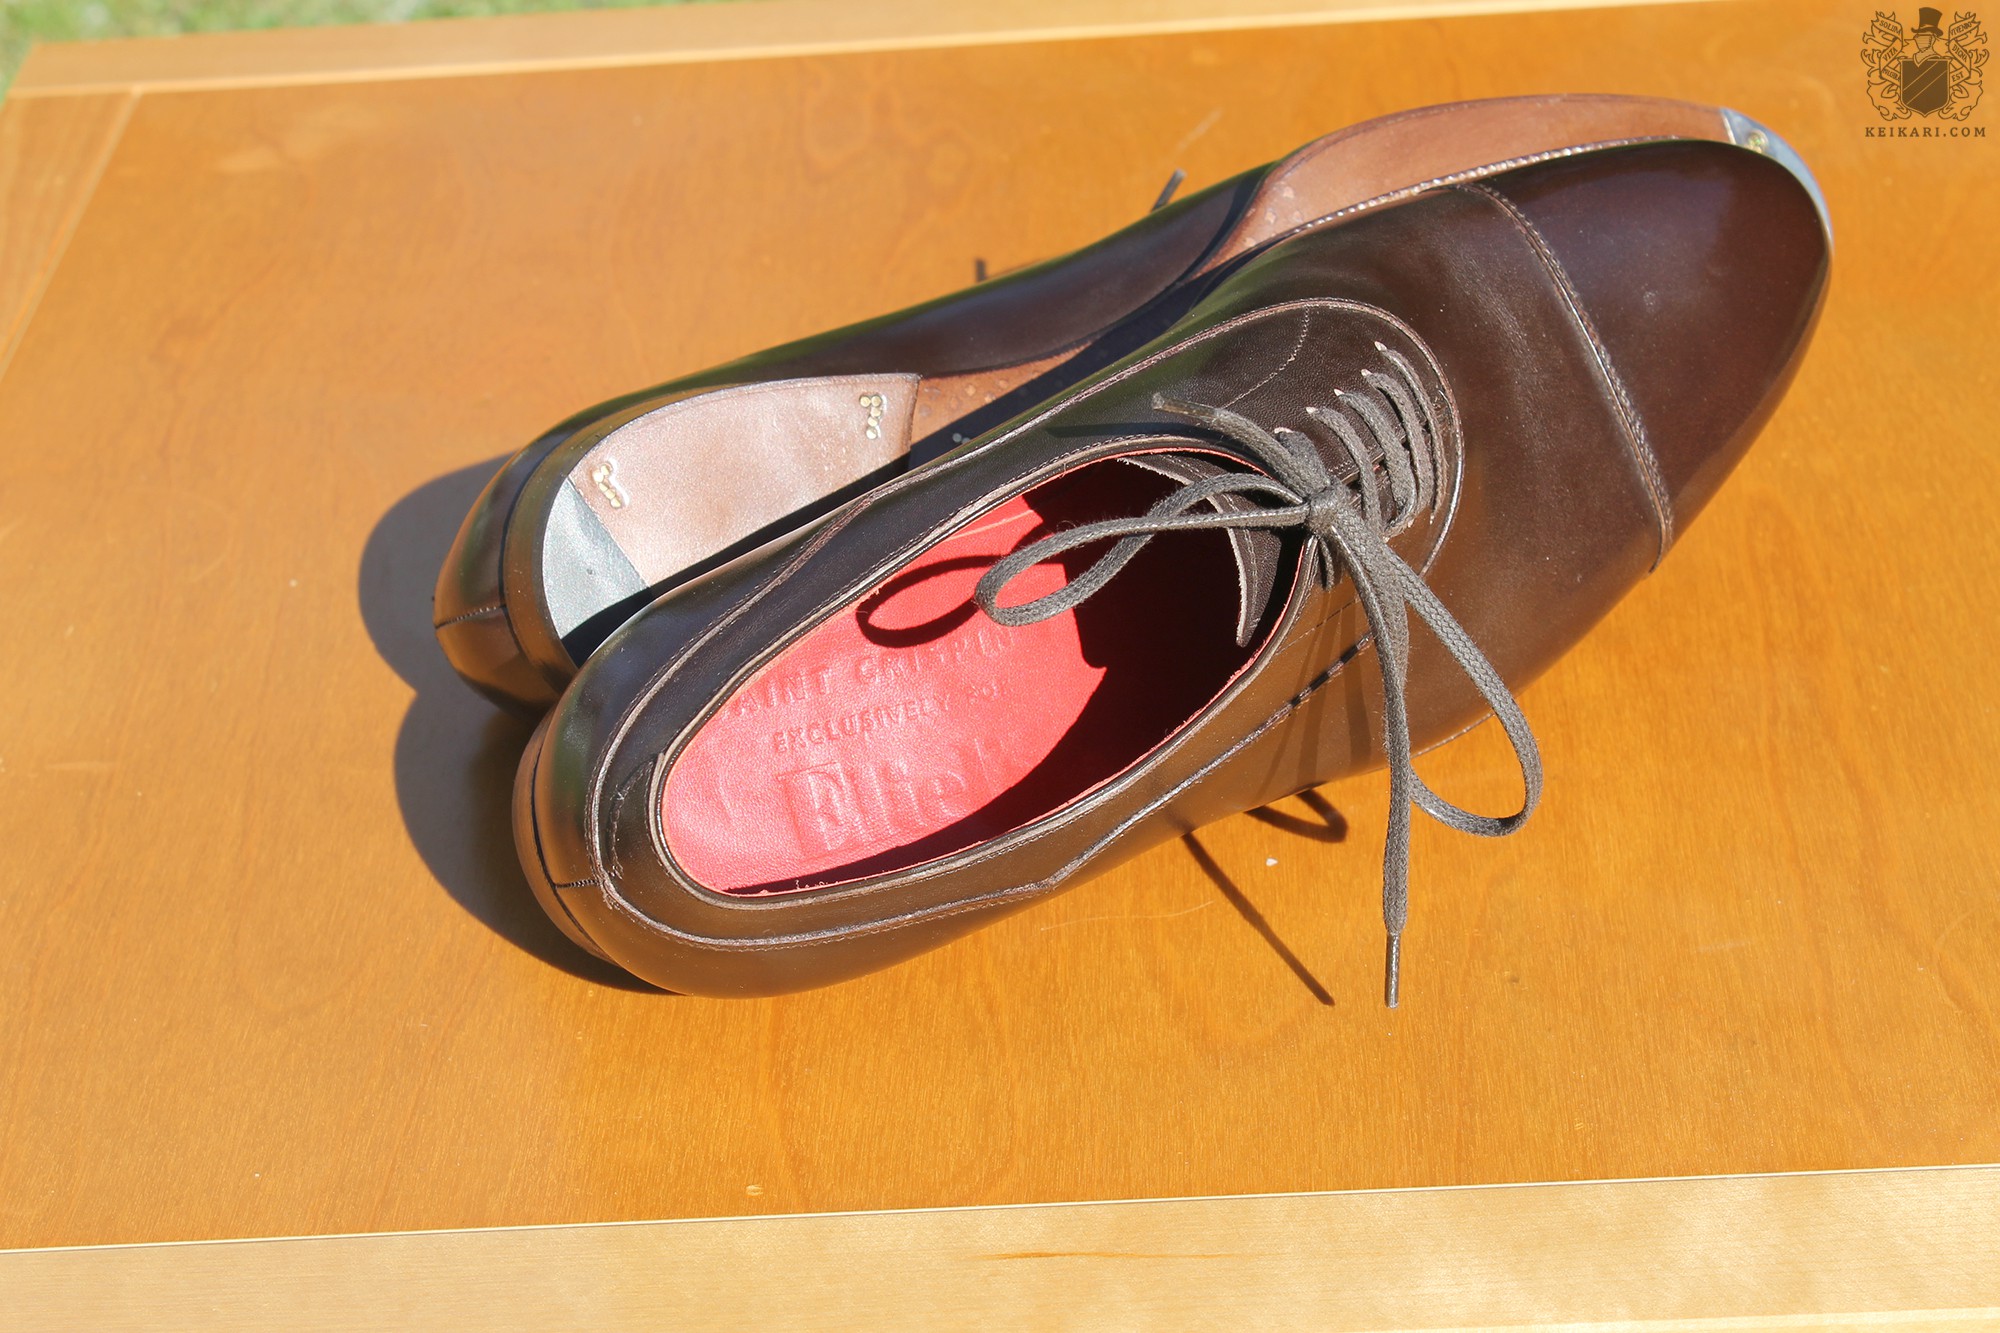 Anatomy_of_Saint_Crispins_shoes_at_Keikari_dot_com13.jpg